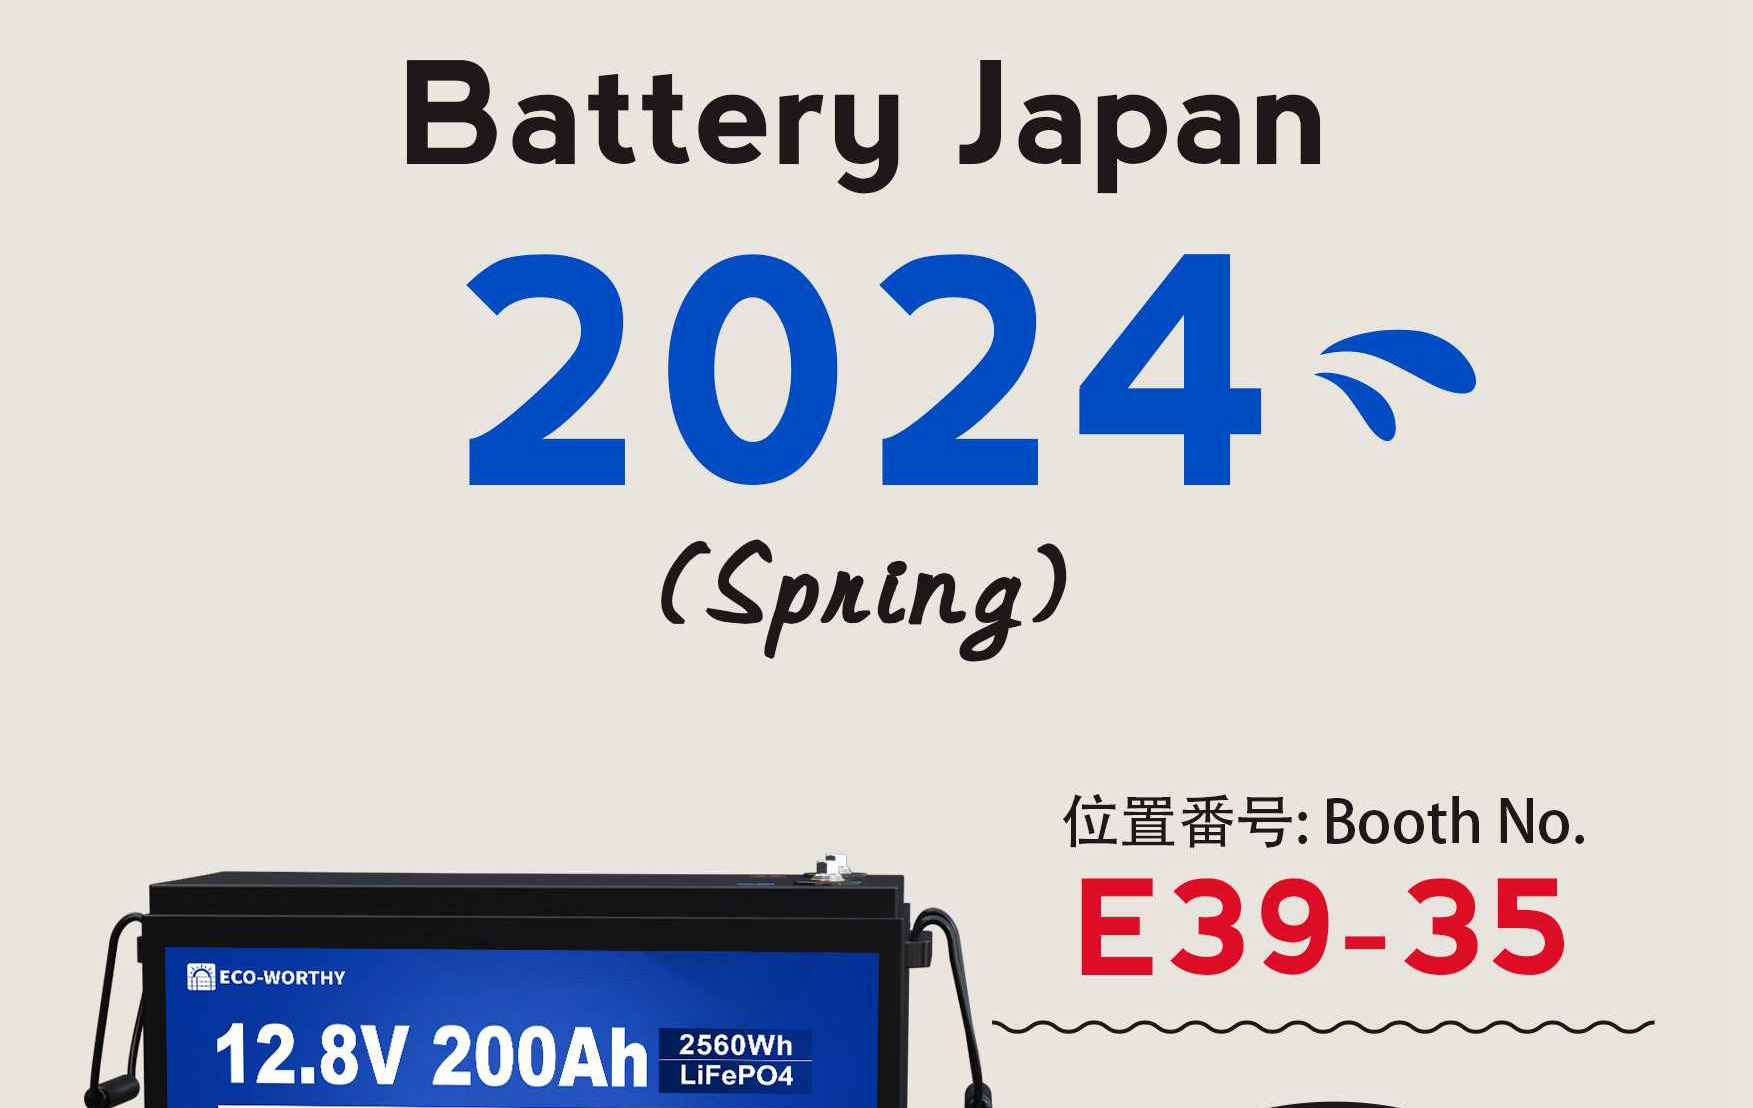 Exposition Battery Japan 2024 (printemps)